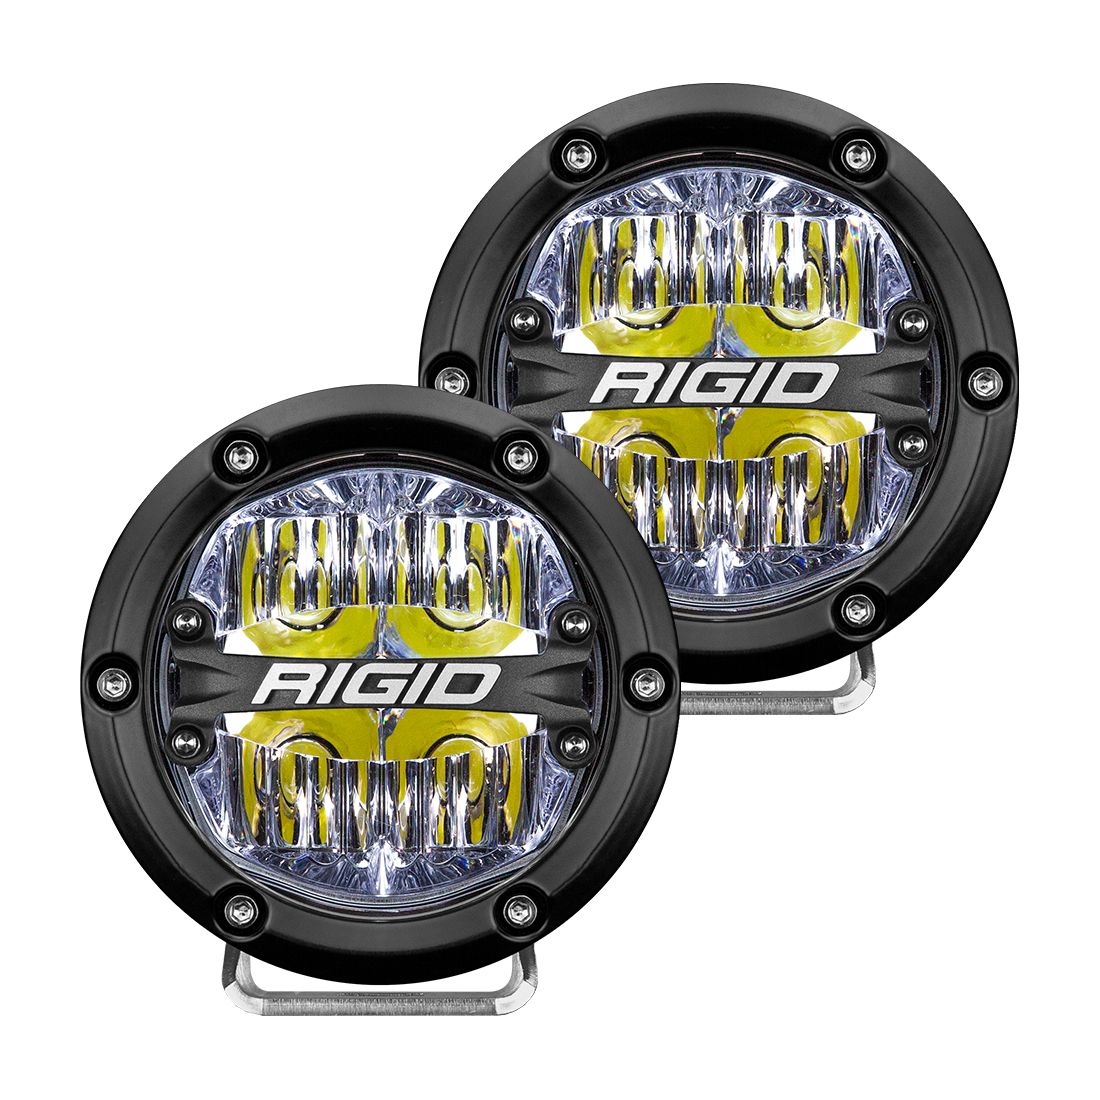 Rigid 360 - Series 4" Round Pair of Lights